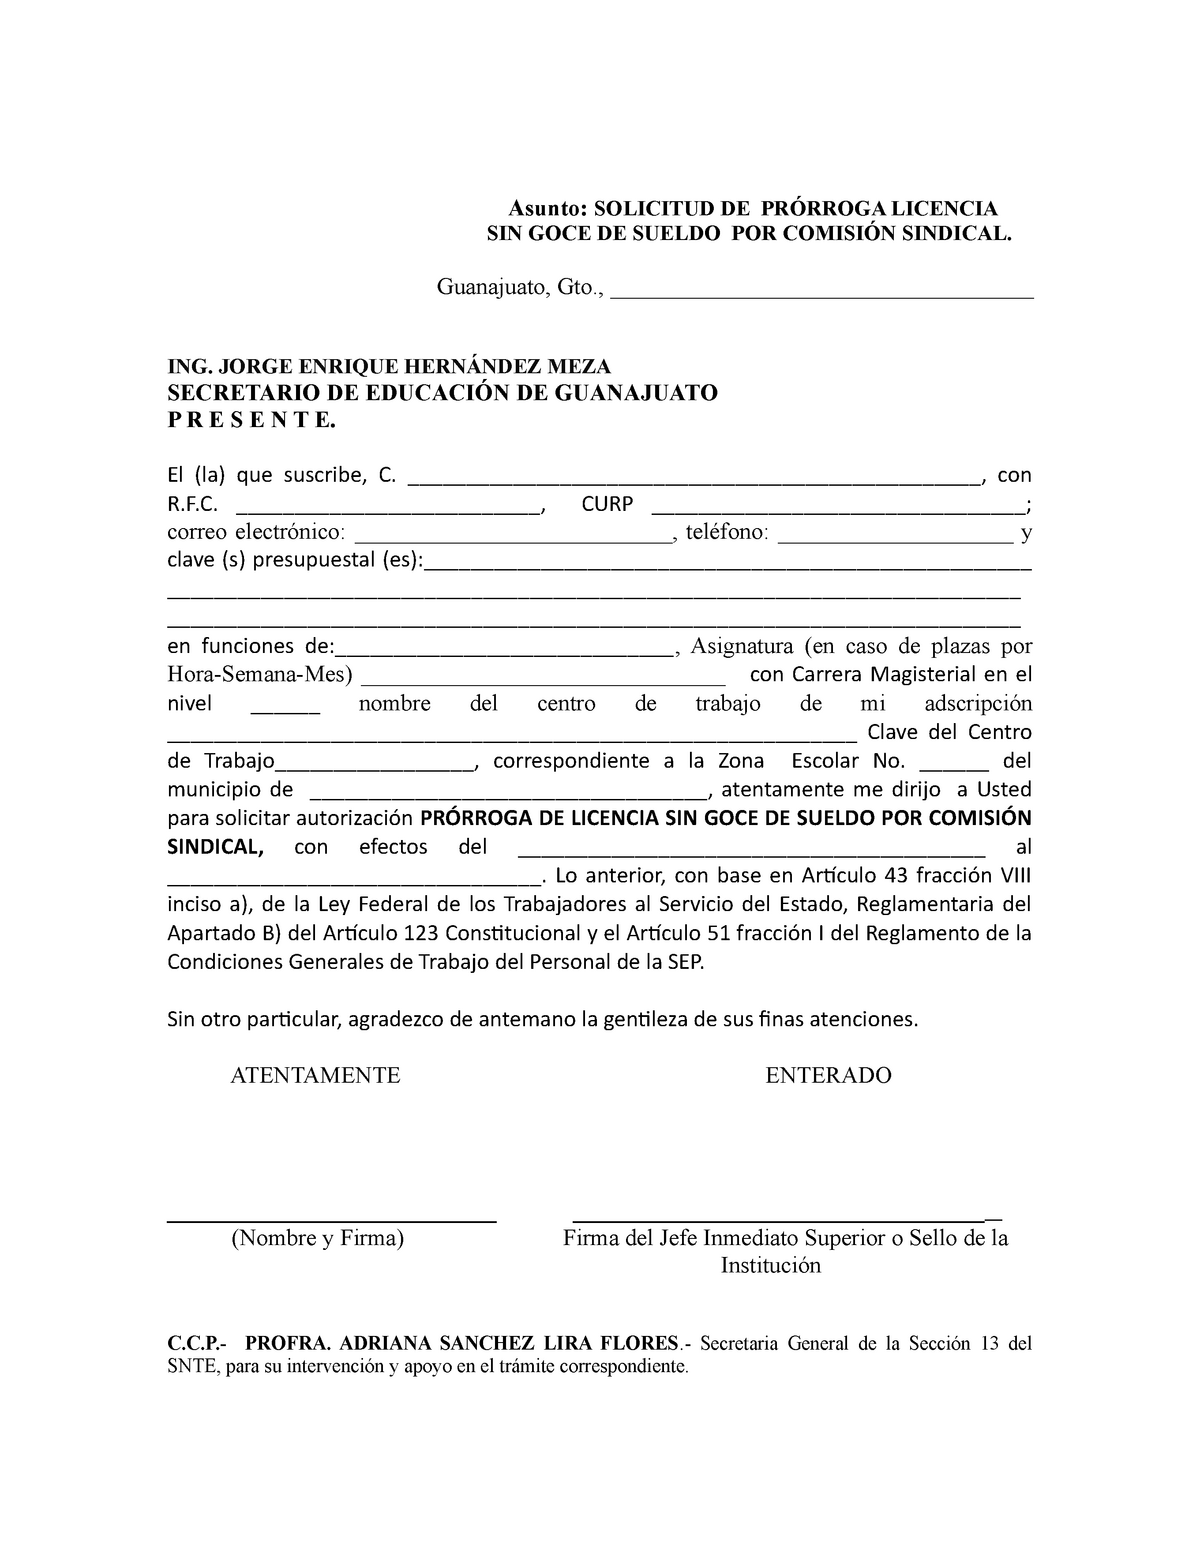 Prorroga DE LIC. POR Comision Sindical-4 - Asunto: SOLICITUD DE PRÓRROGA LICENCIA  SIN GOCE DE SUELDO - Studocu